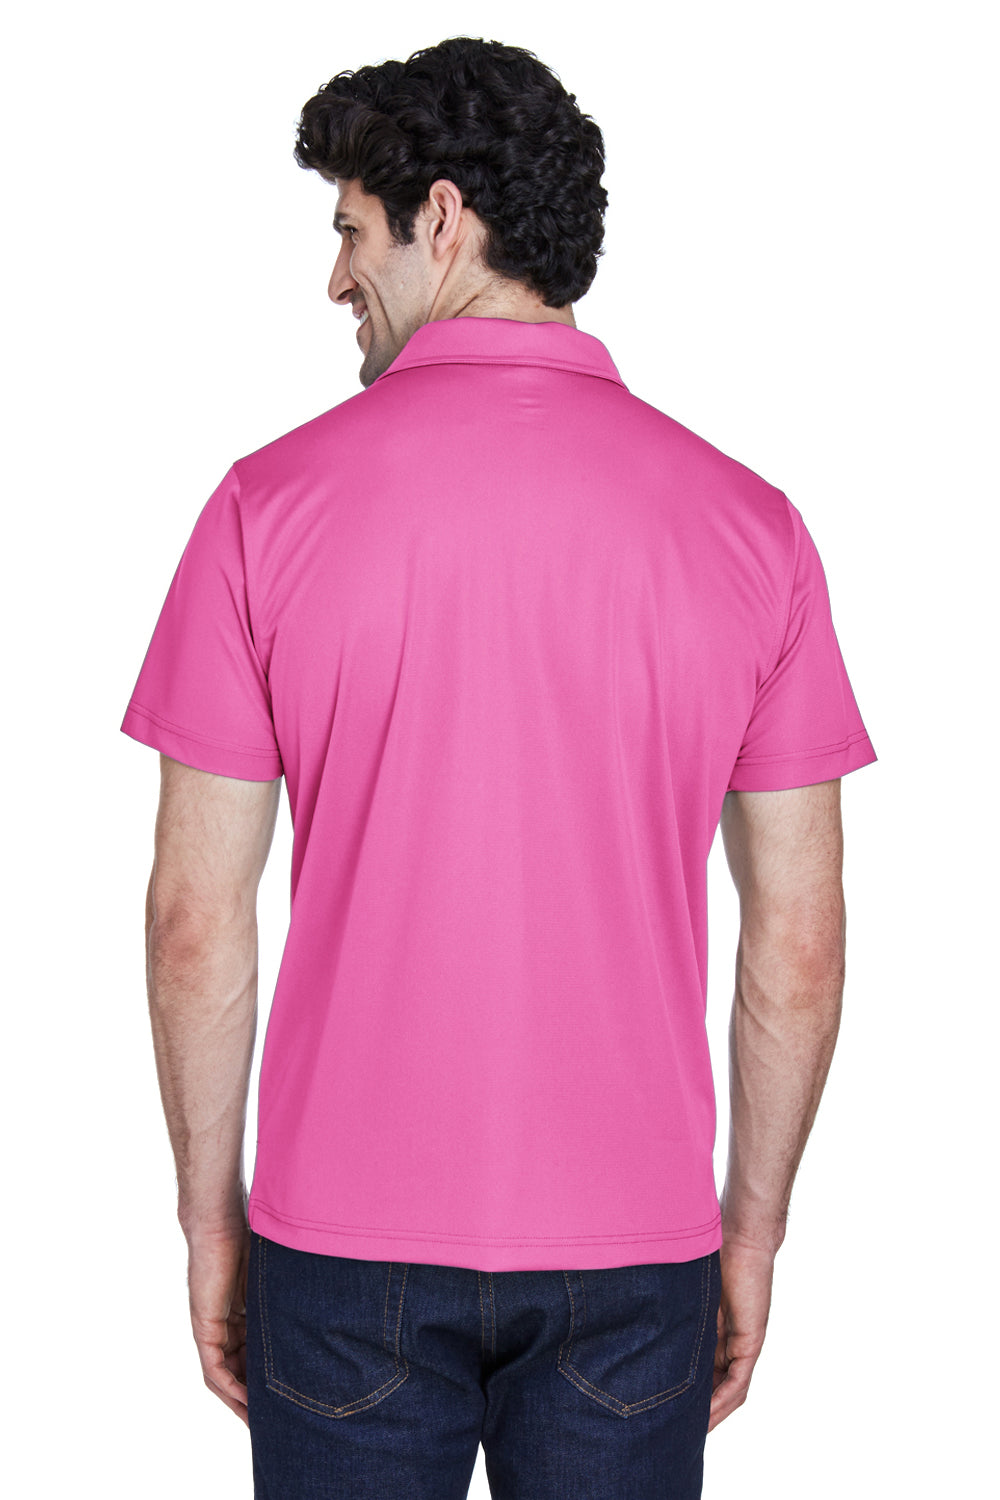 Team 365 TT21 Mens Command Performance Moisture Wicking Short Sleeve Polo Shirt Charity Pink Back